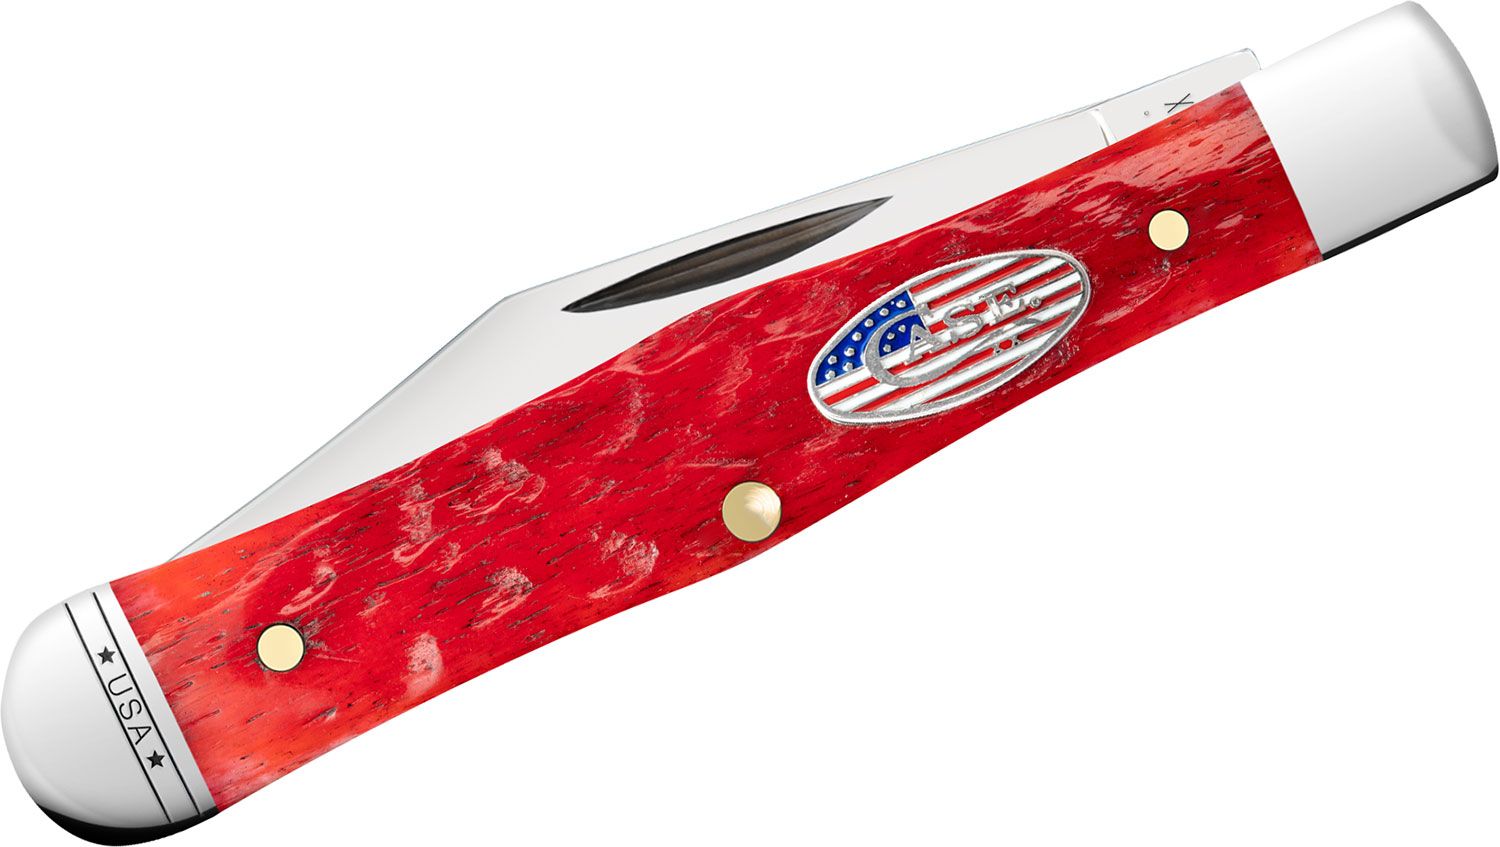 Case Dark Red Bone Small Swell Center Jack Knife, Polish Blade